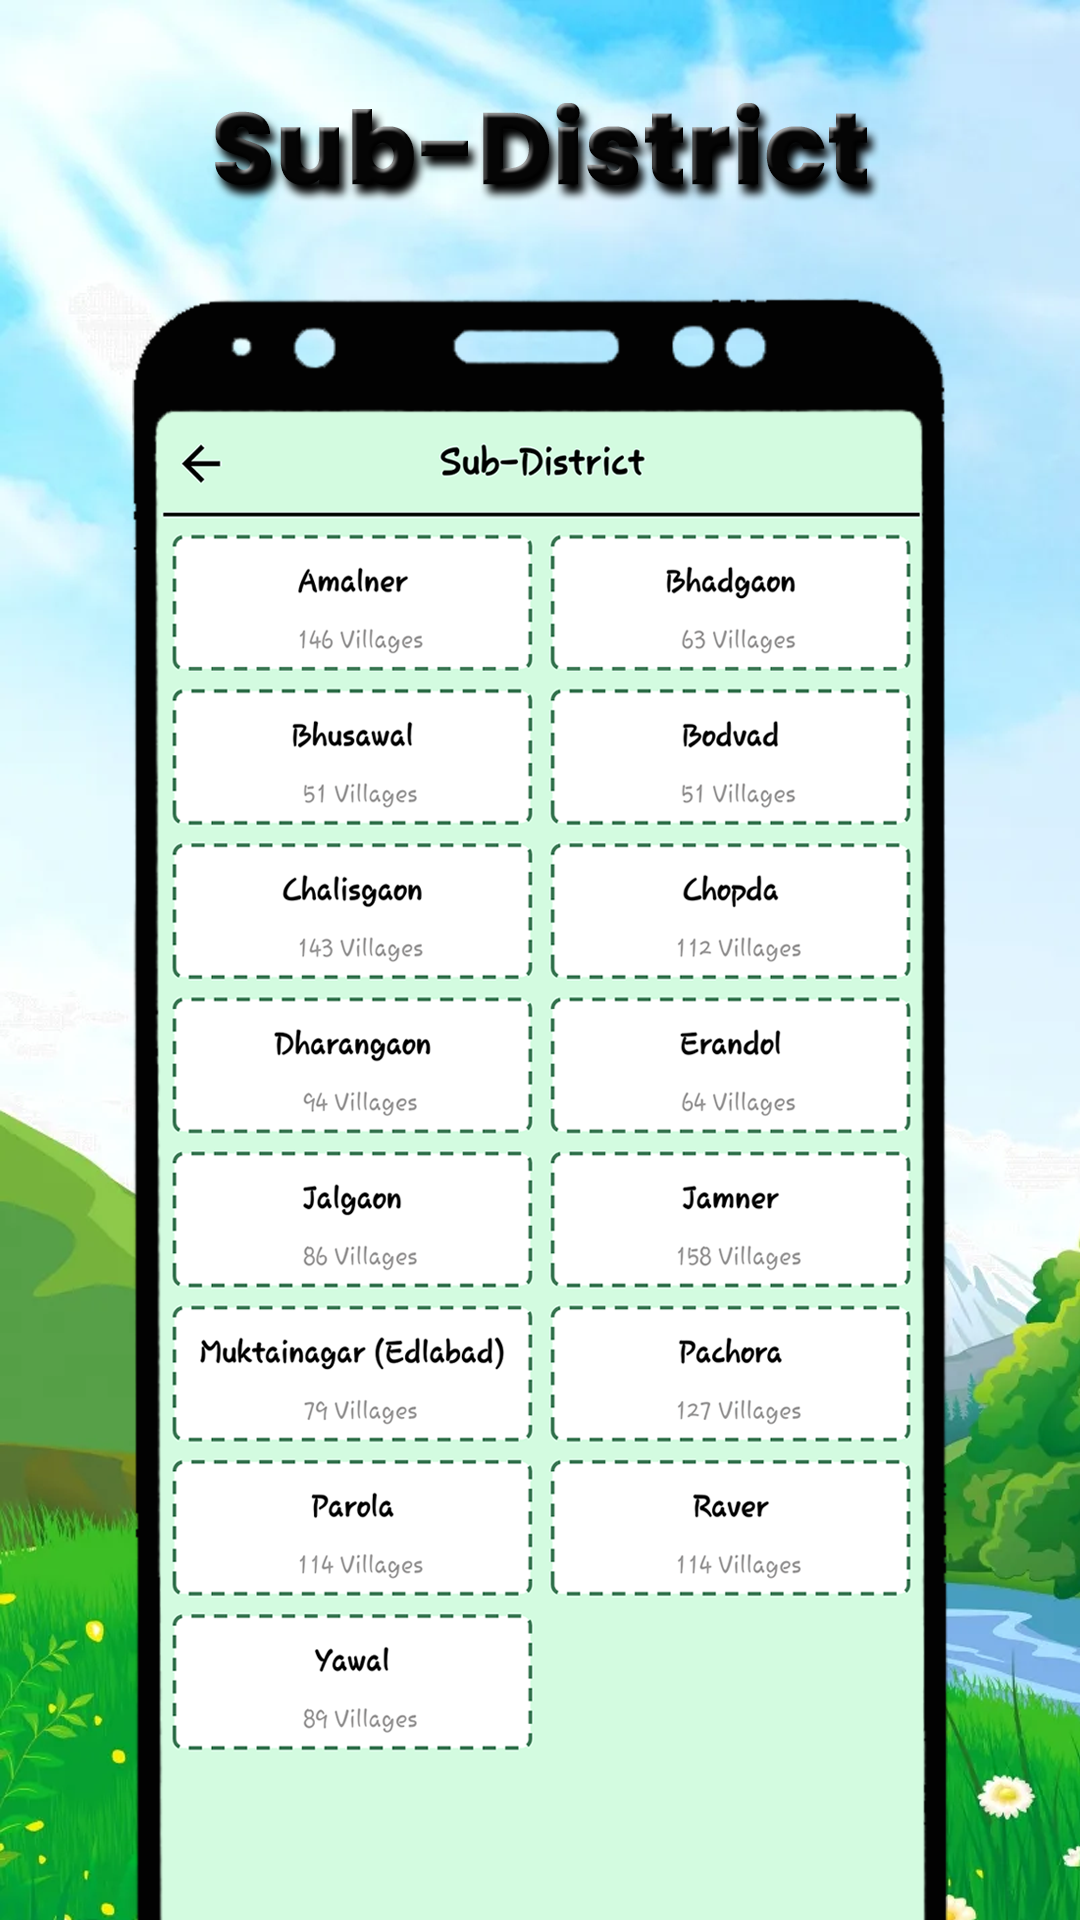 All India Village Map App